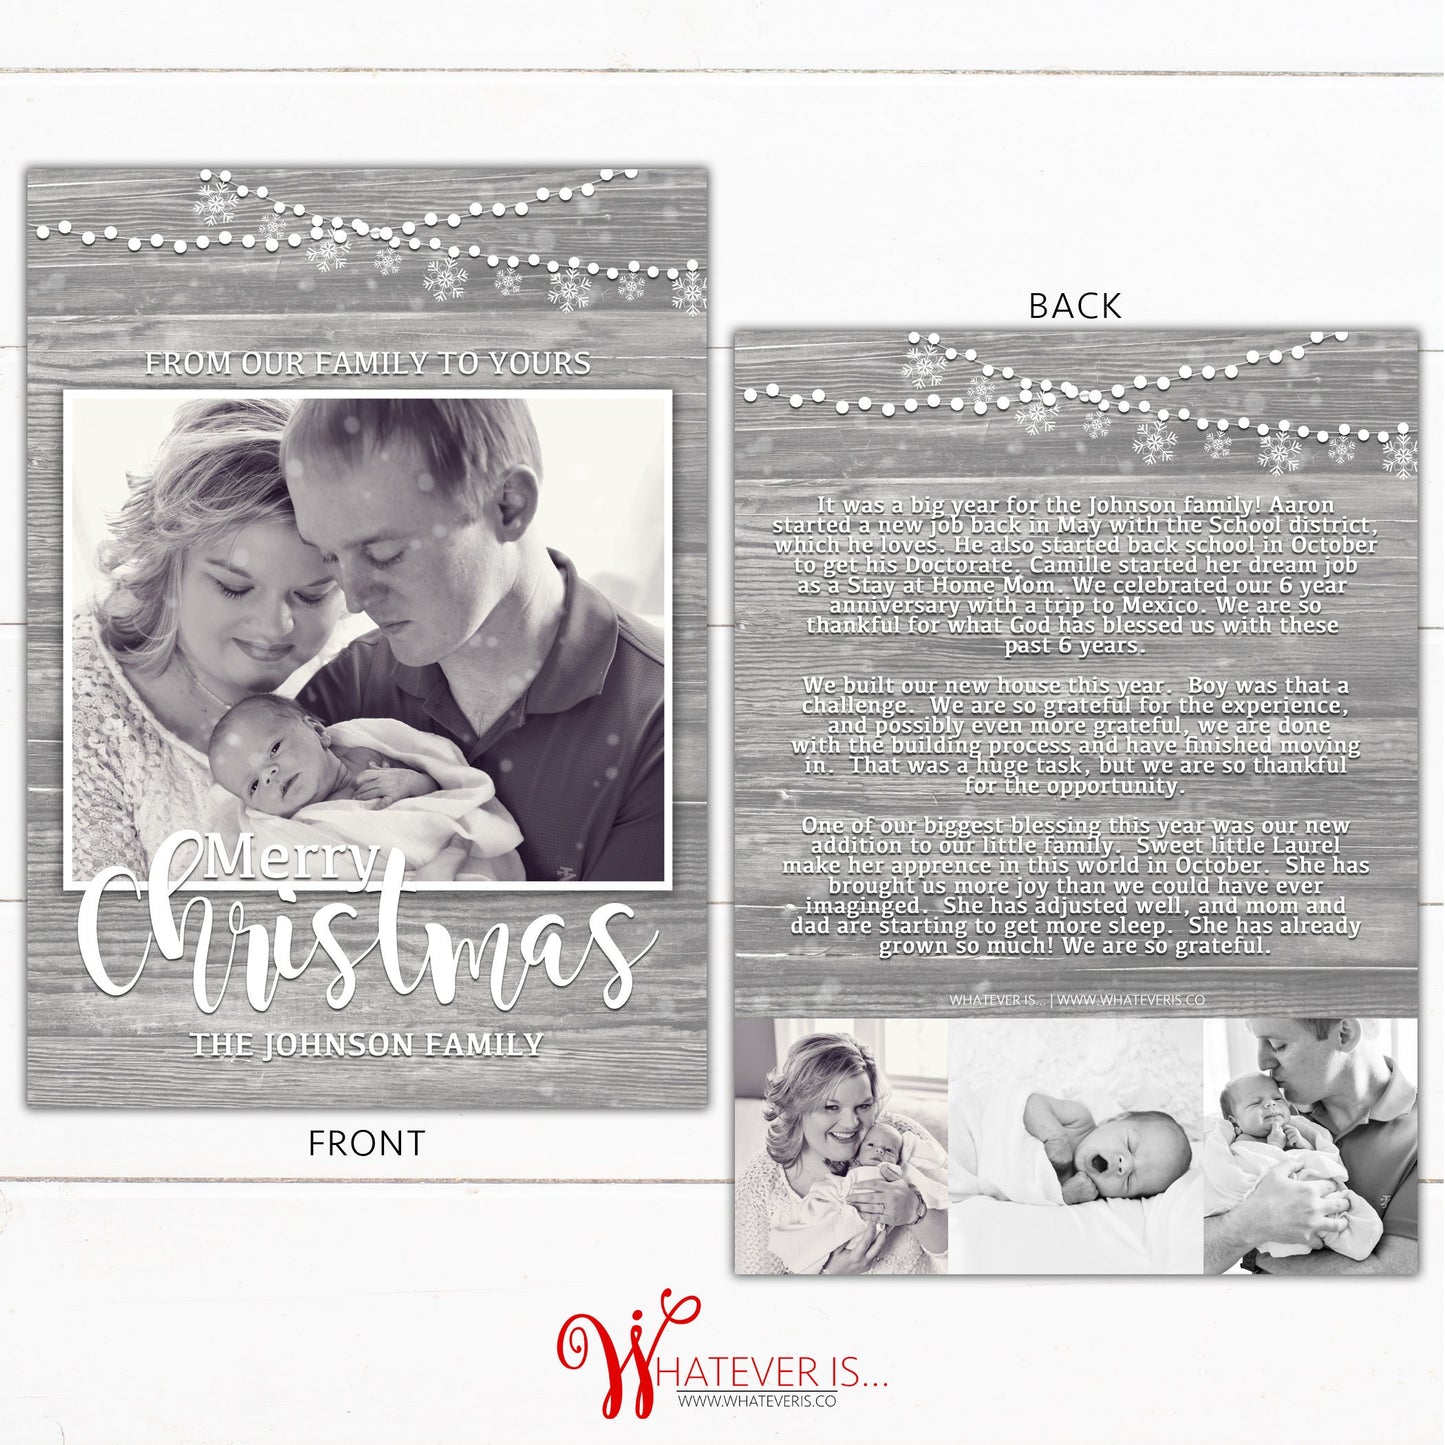 Rustic Snowflake Christmas Card | Rustic Family Christmas Card | Picture Christmas Card | Year in Review Christmas Card | Holiday Card